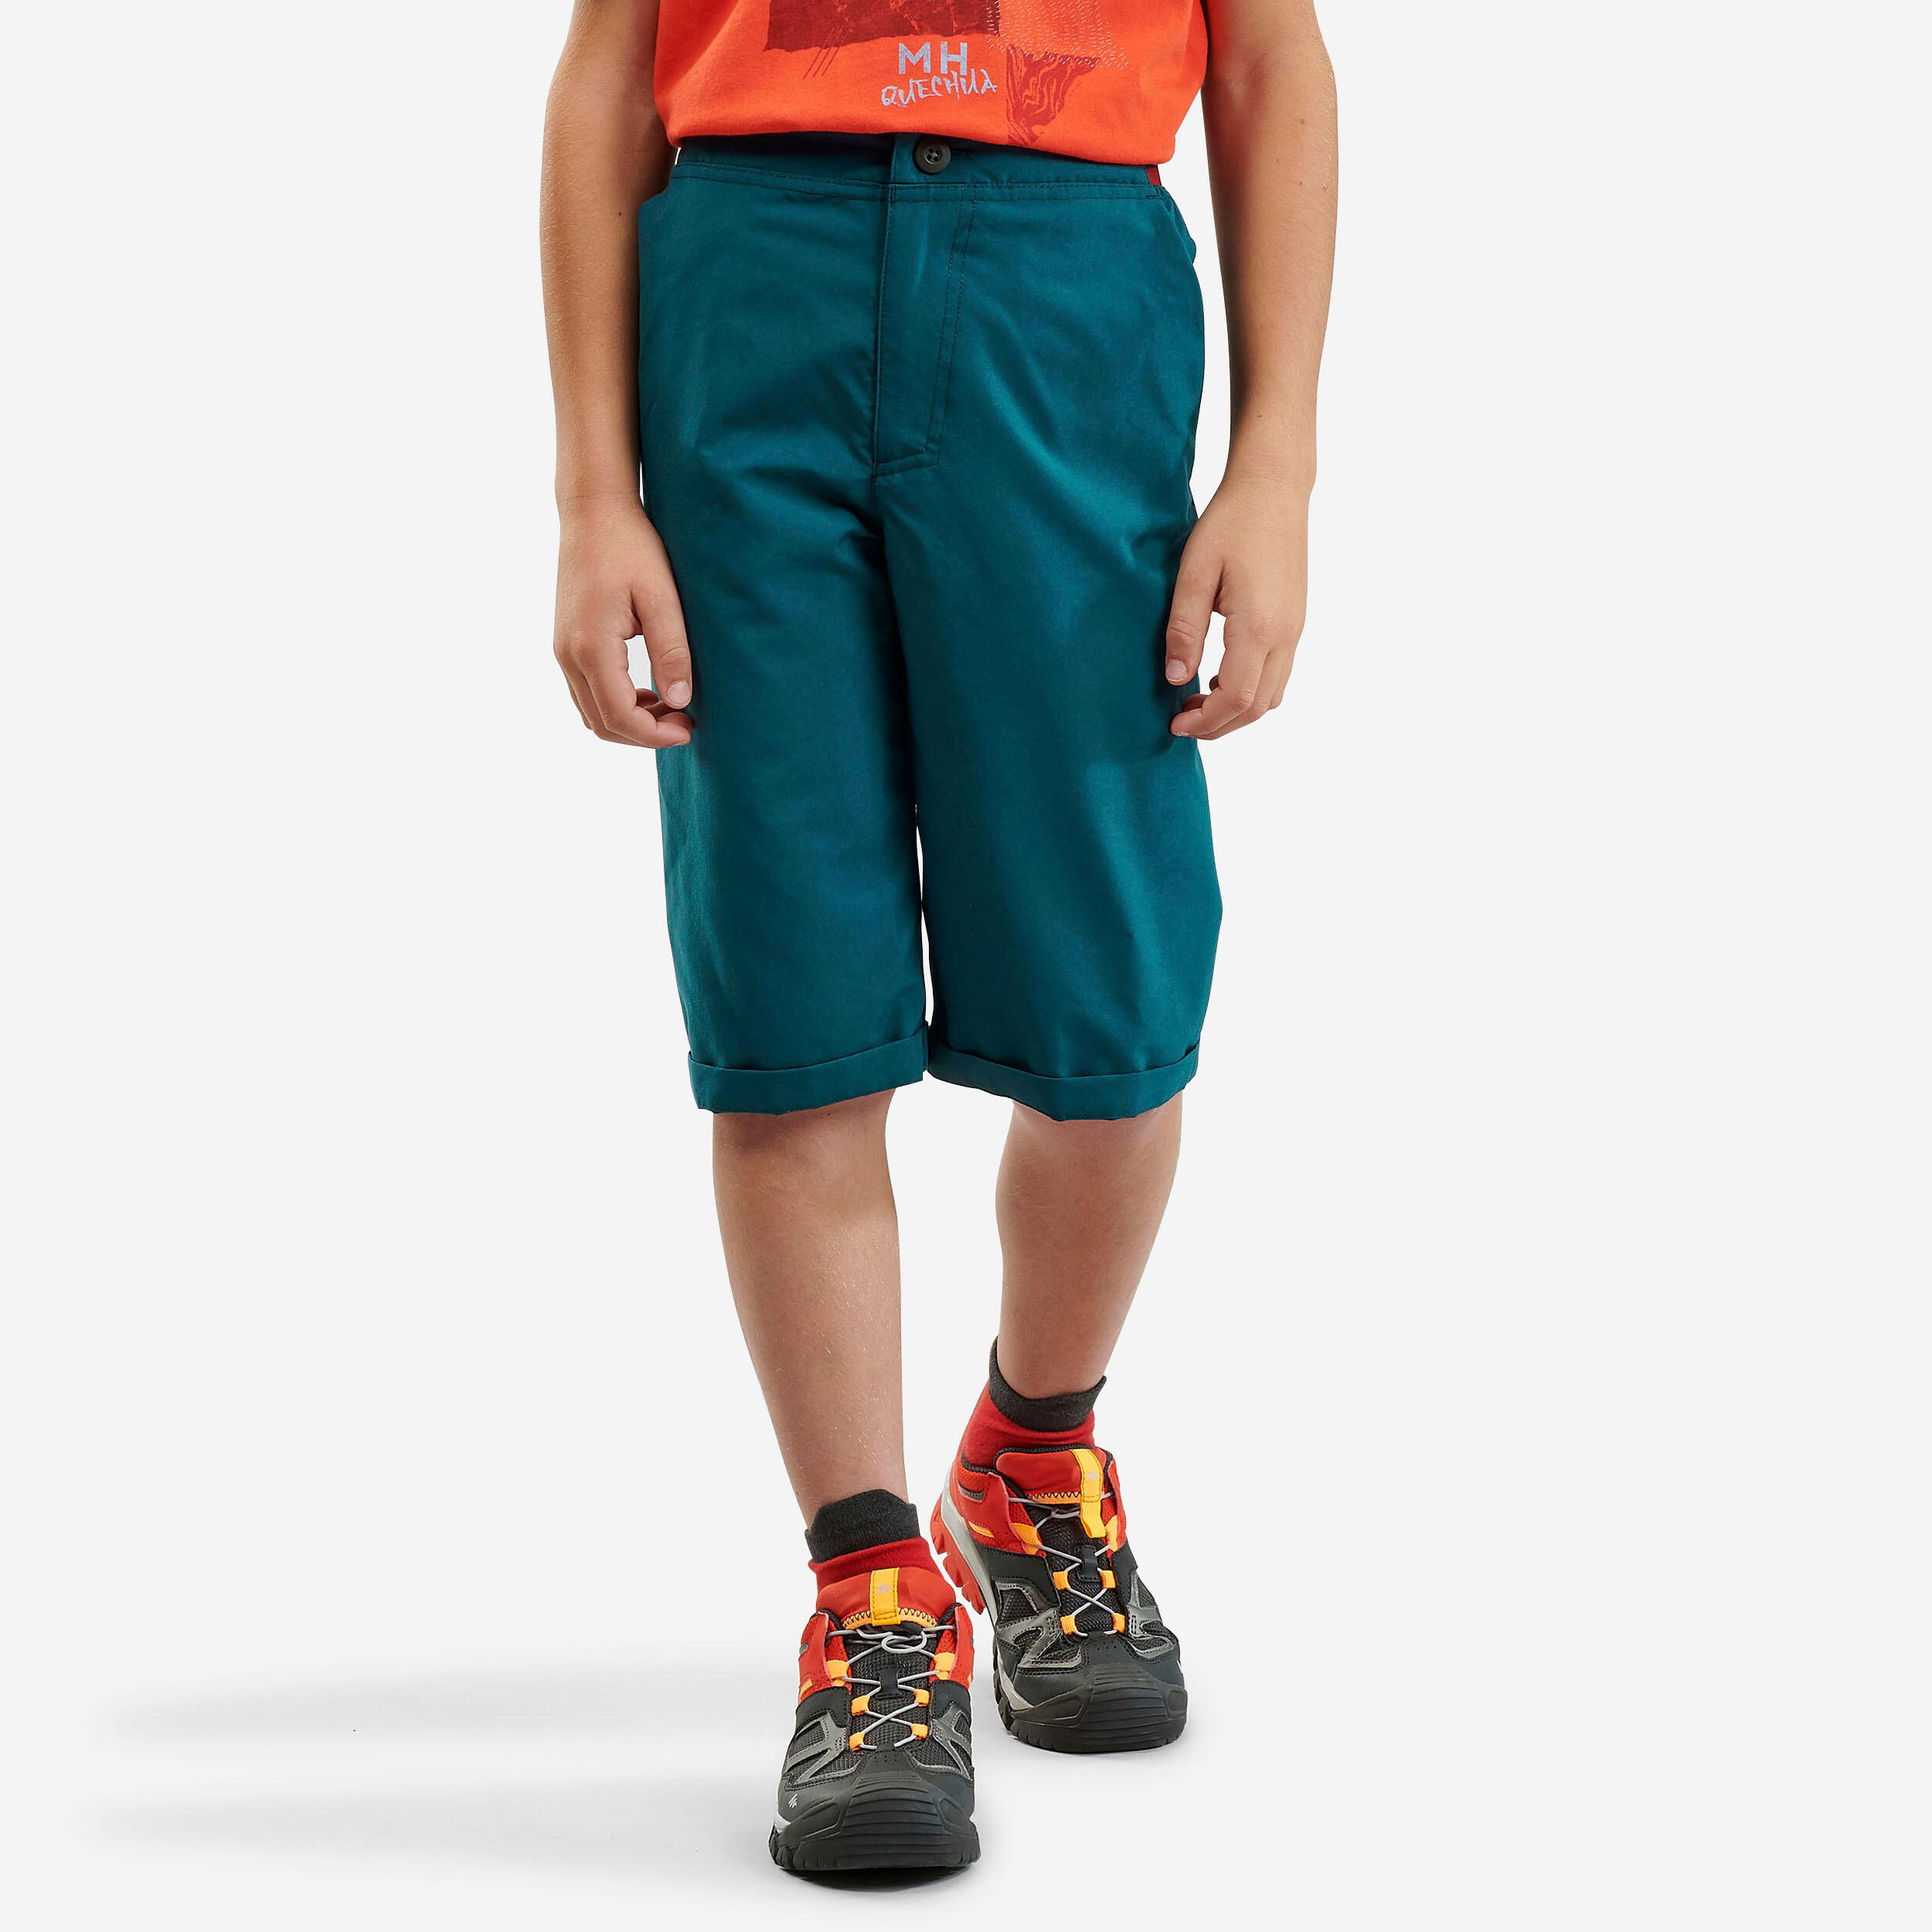 QUECHUA Kids’ Hiking Shorts - MH100 Aged 7-15 - Green